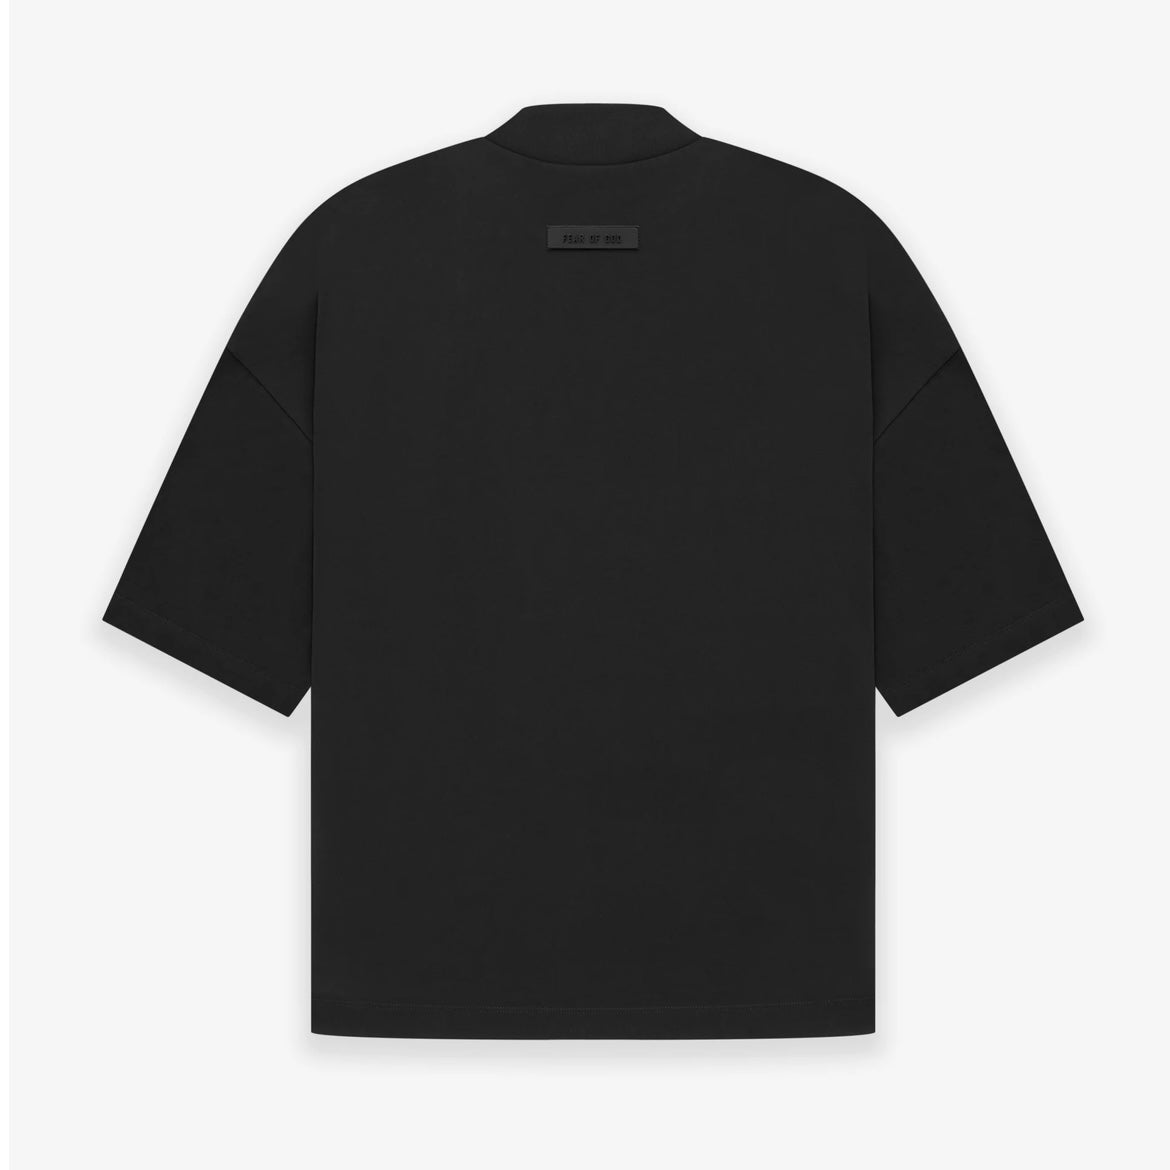 Fear of God Essentials Jet Black T-Shirt Back VIew